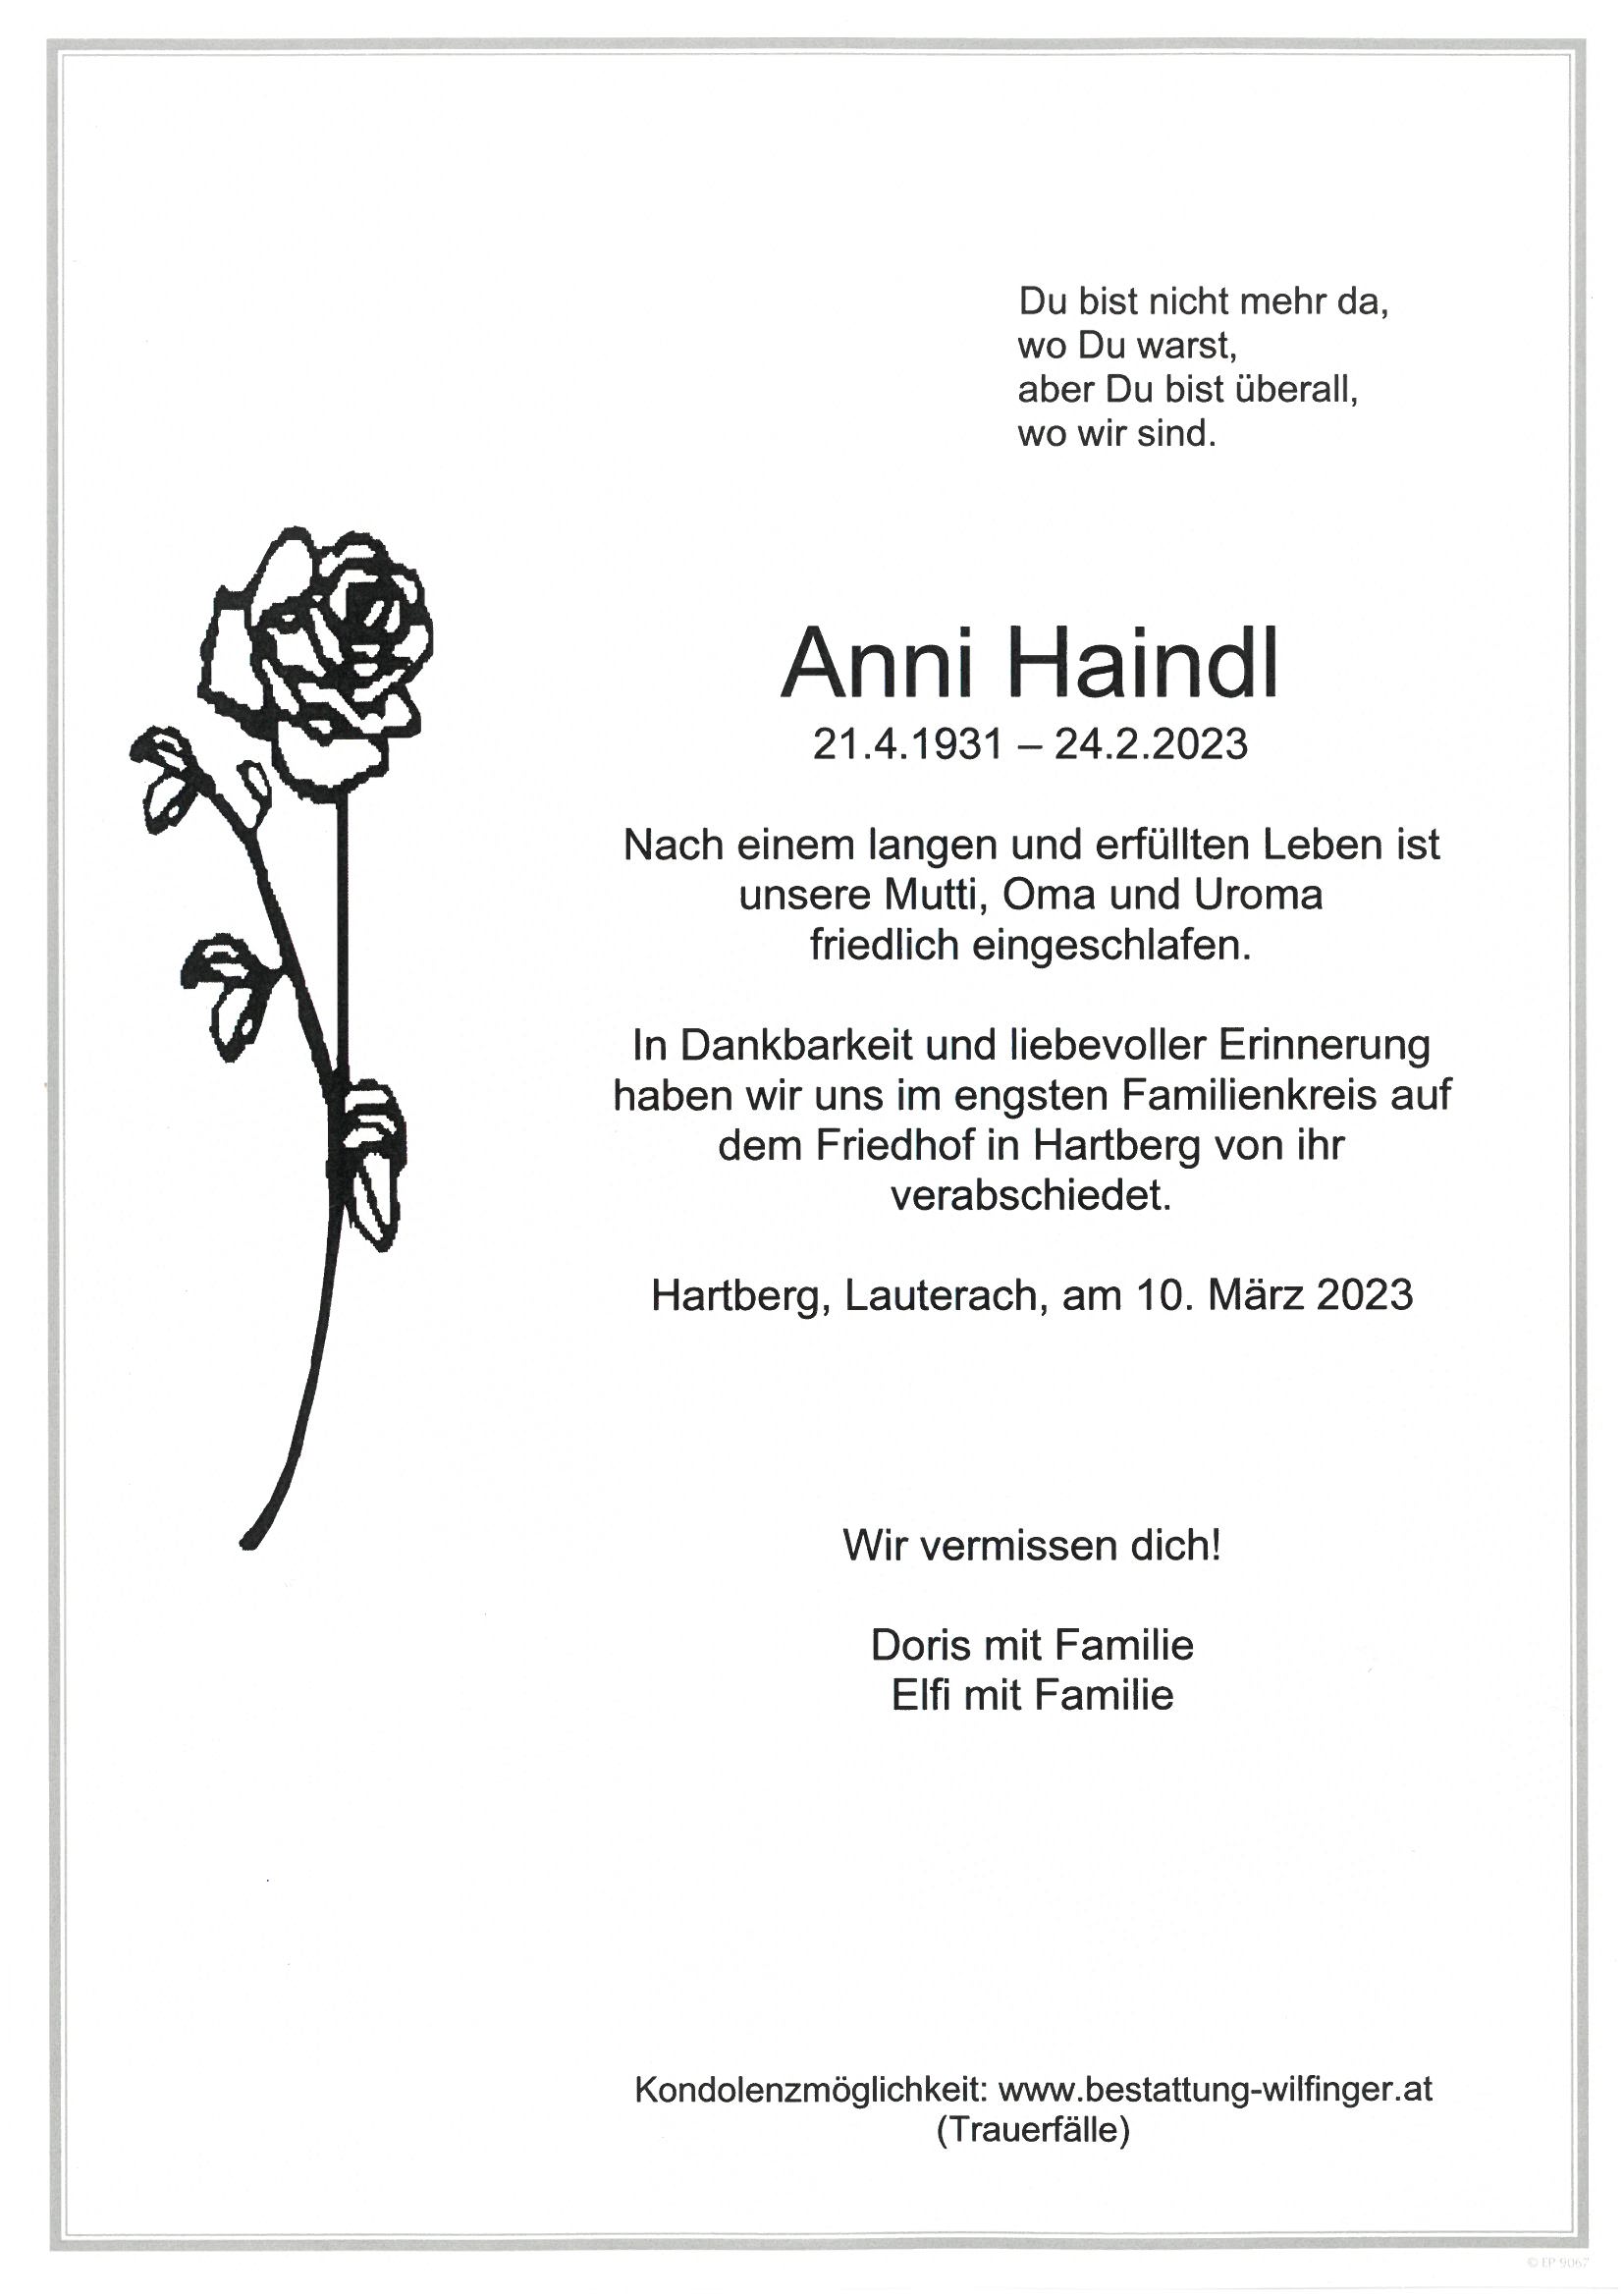 Anni Haindl, Hartberg